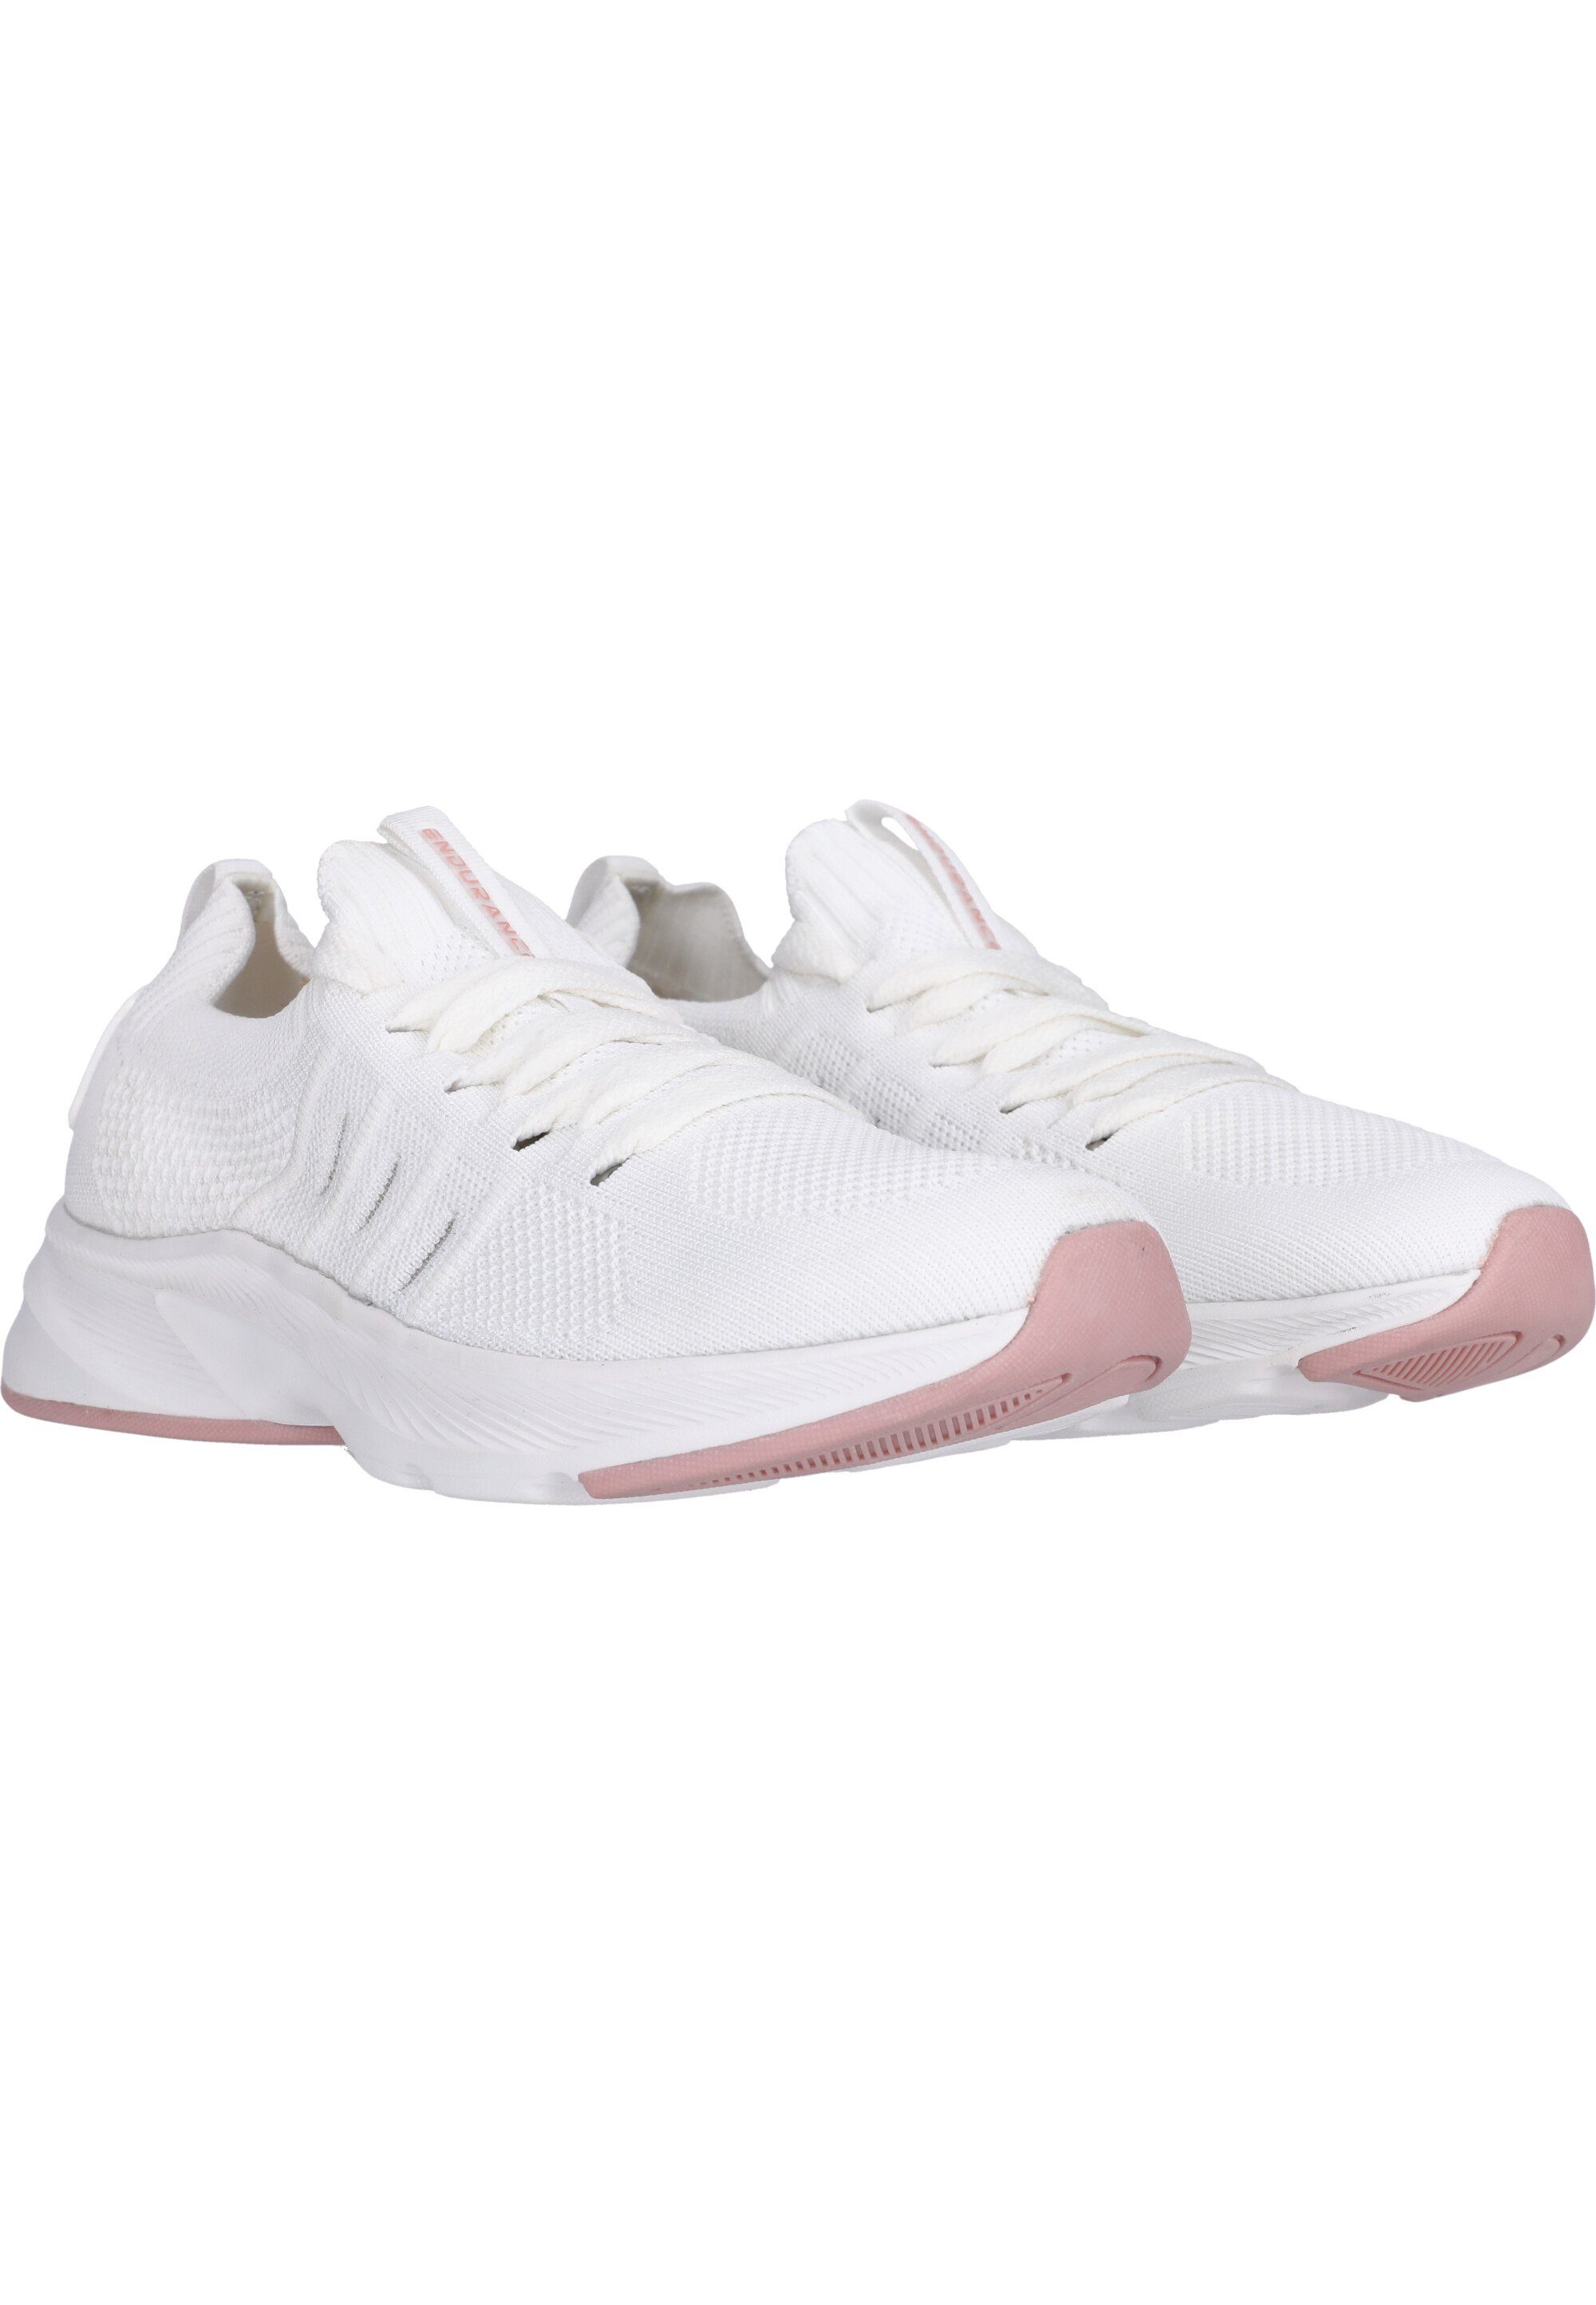 ENDURANCE Tervilla Sneaker weiß-rosa Light-Weight-Funktion mit